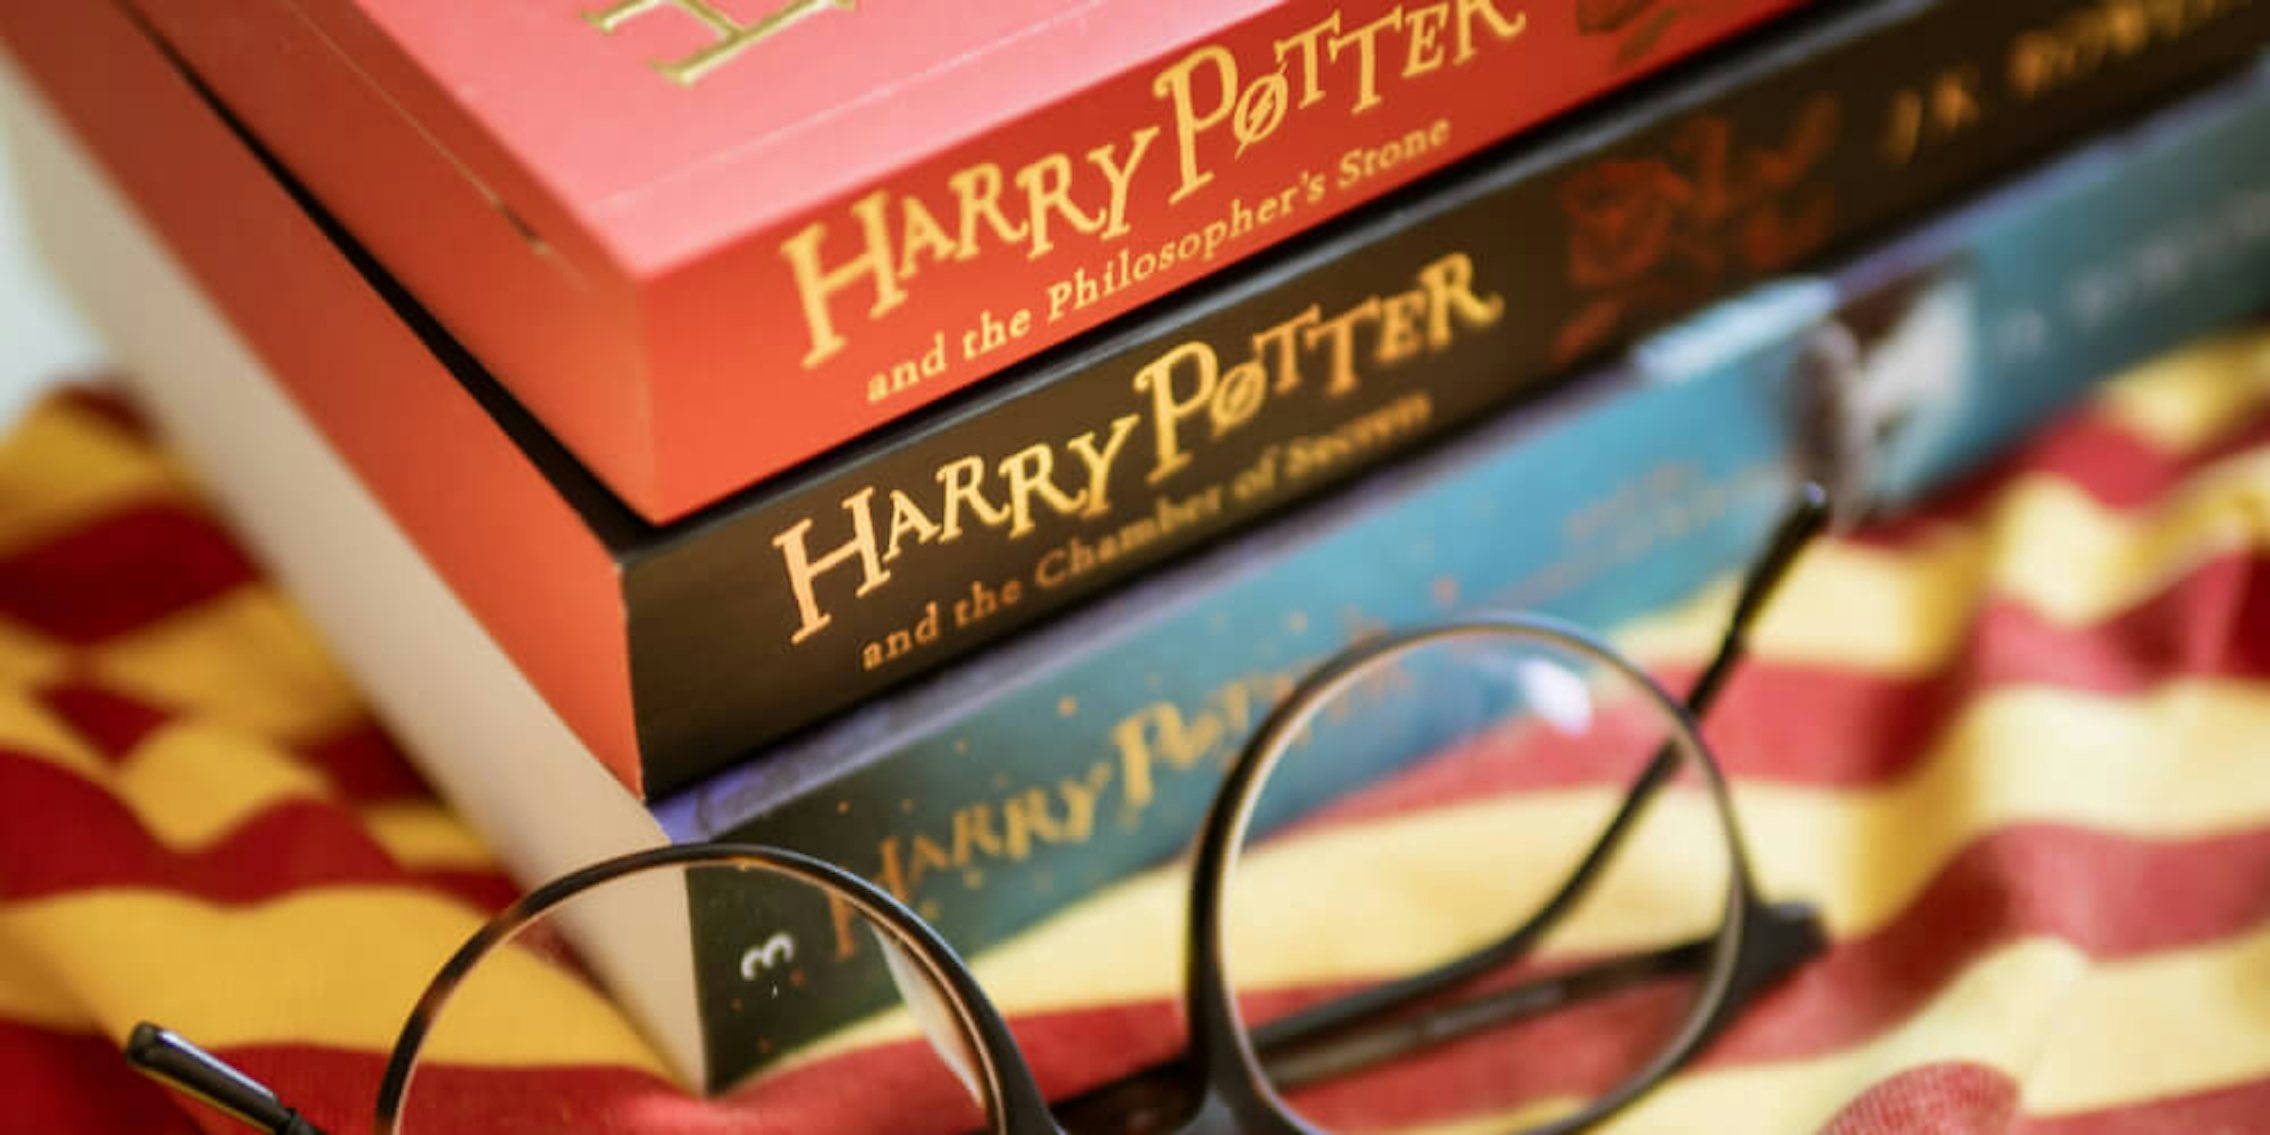 Harry potter book ban